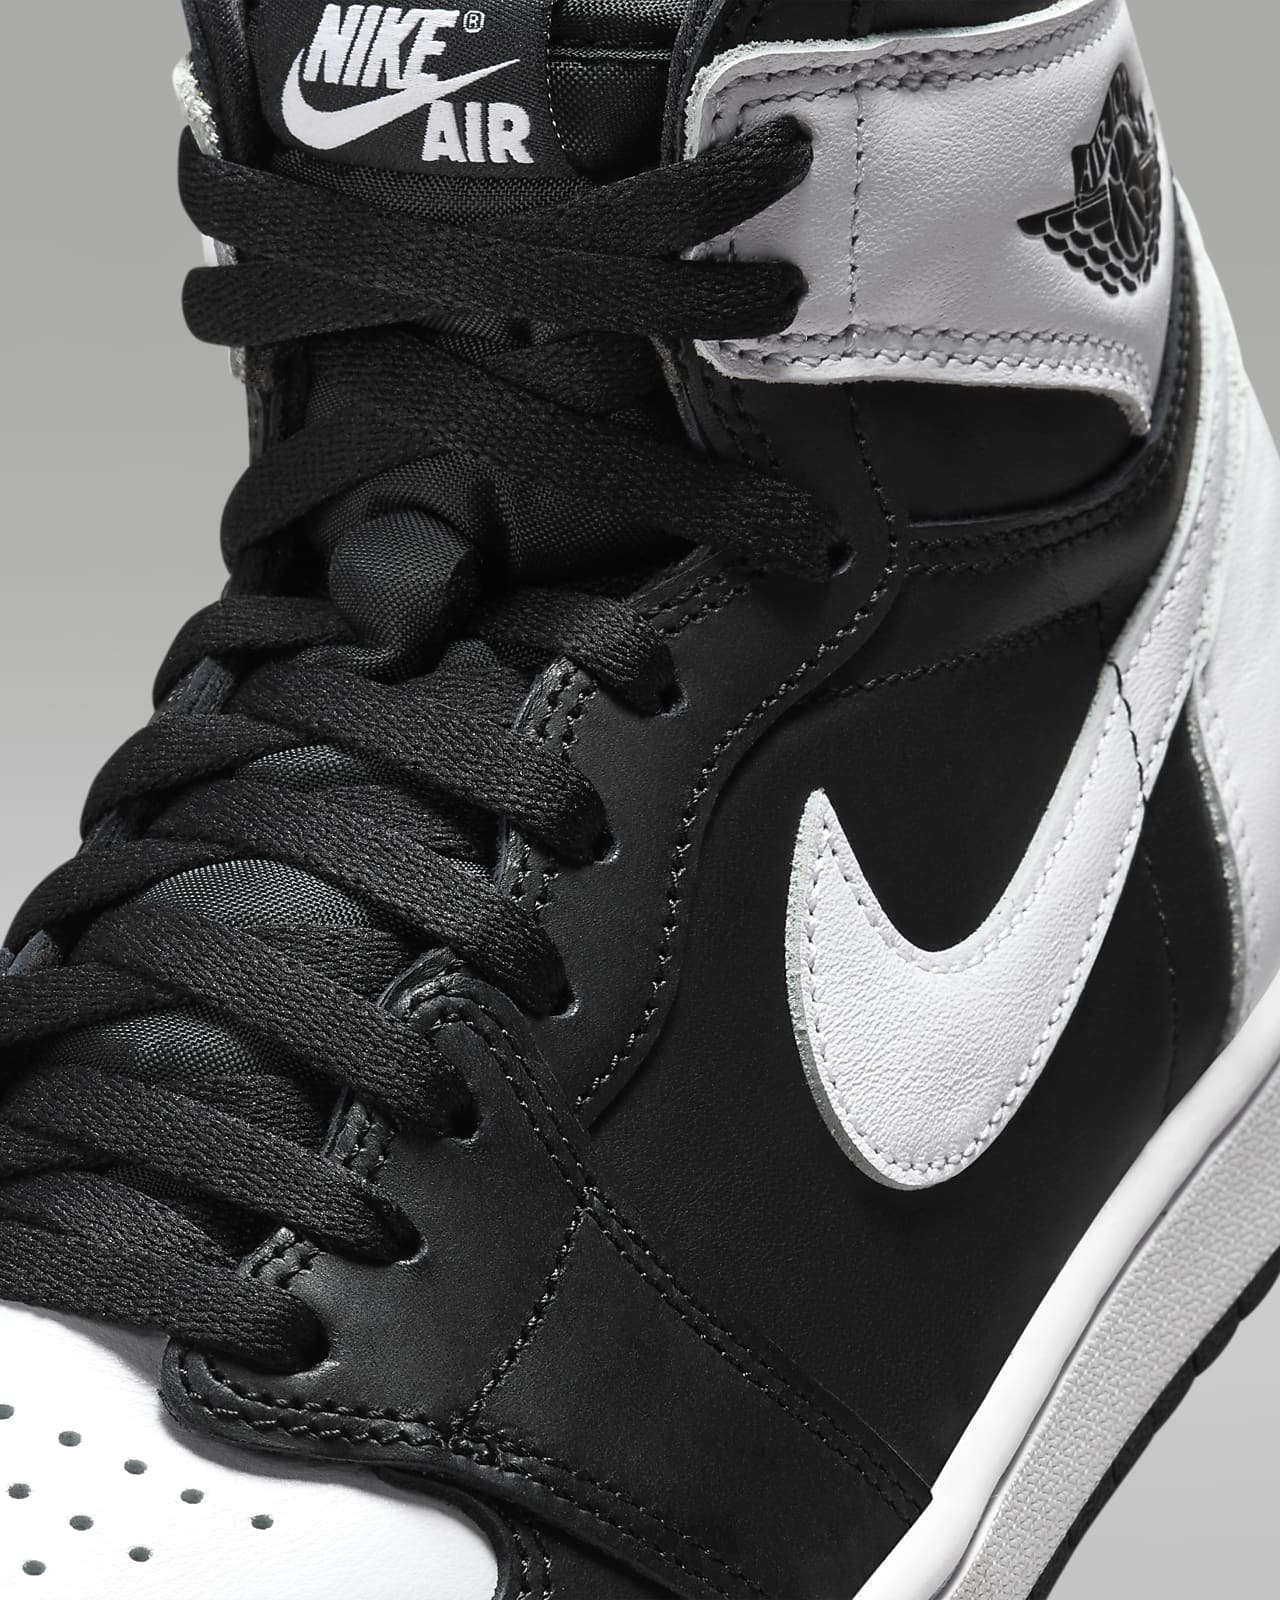 Nike Air Jordan 1 Retro OG Black/White宜しくお願いします